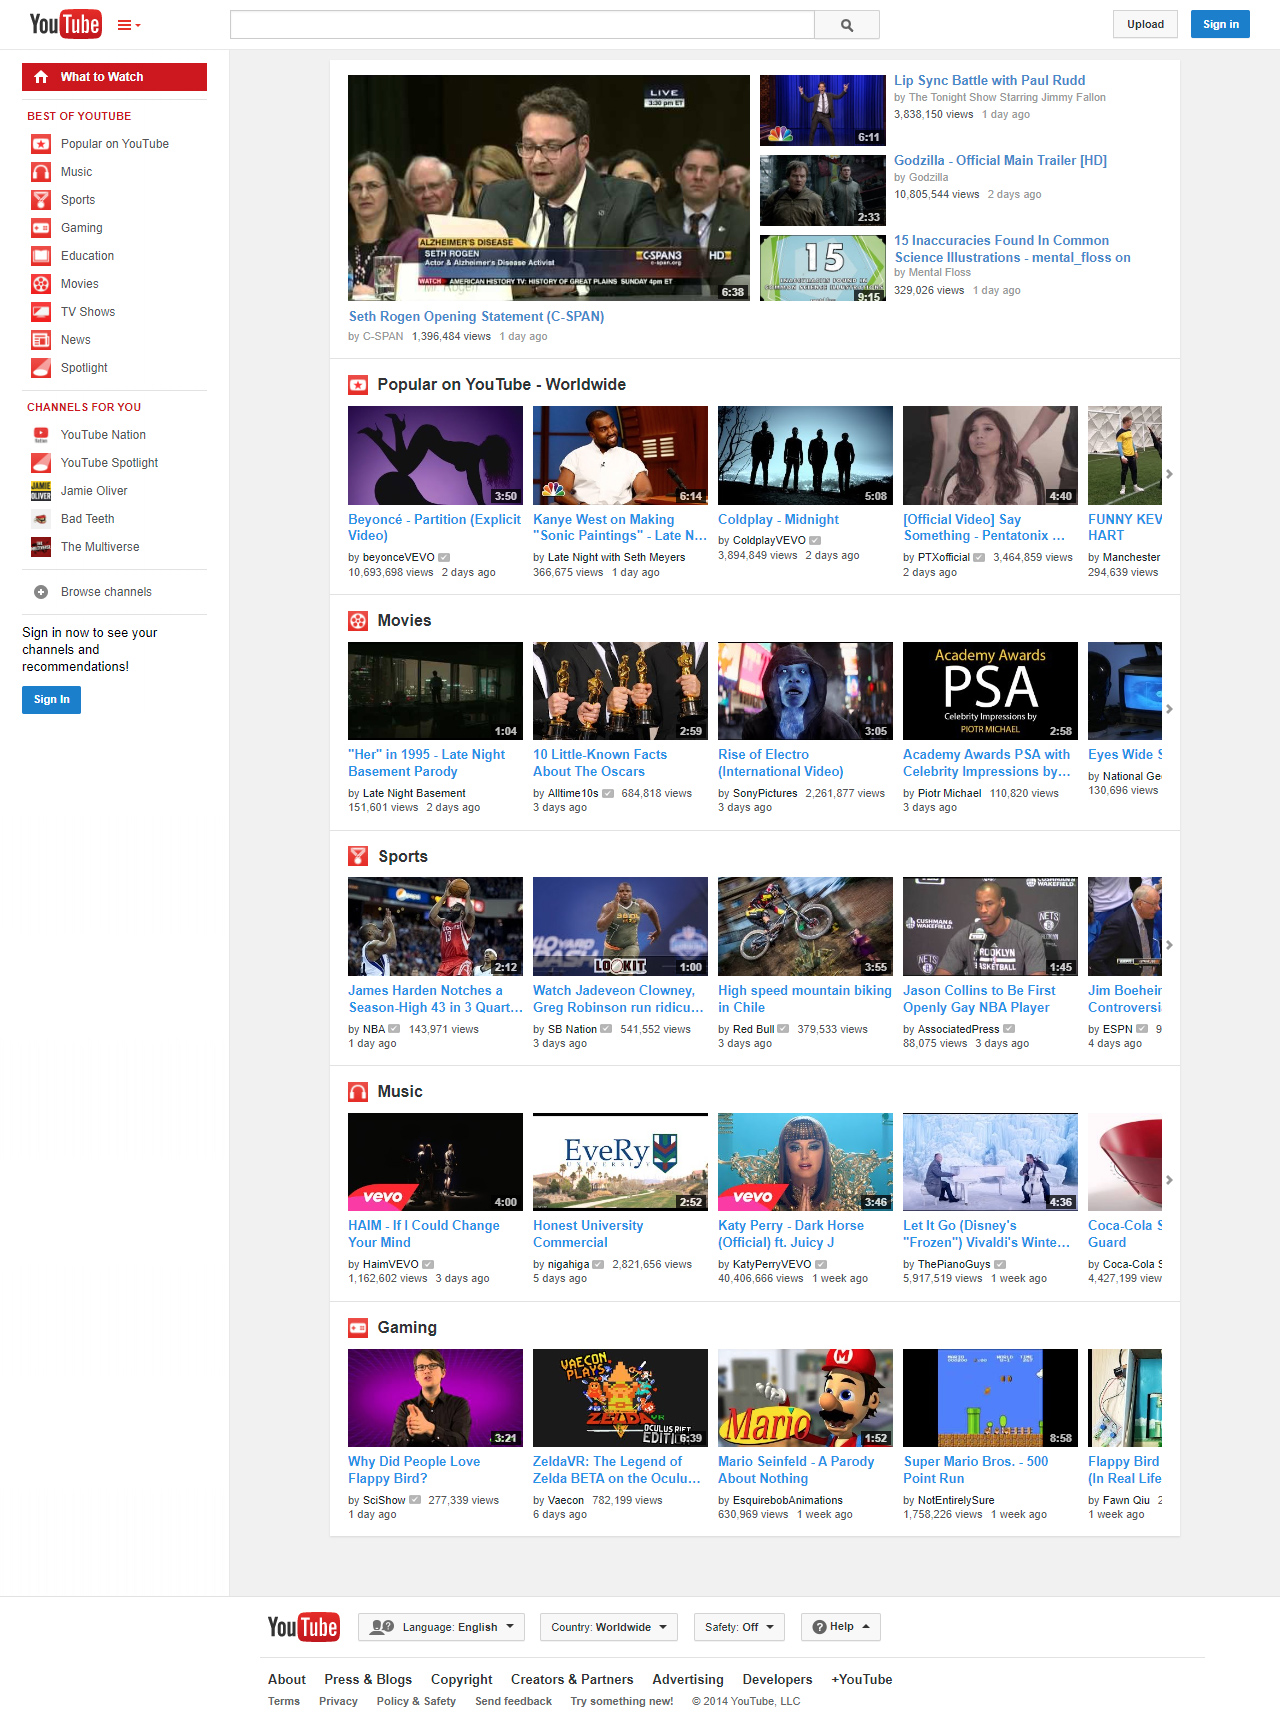 YouTube website in 2014